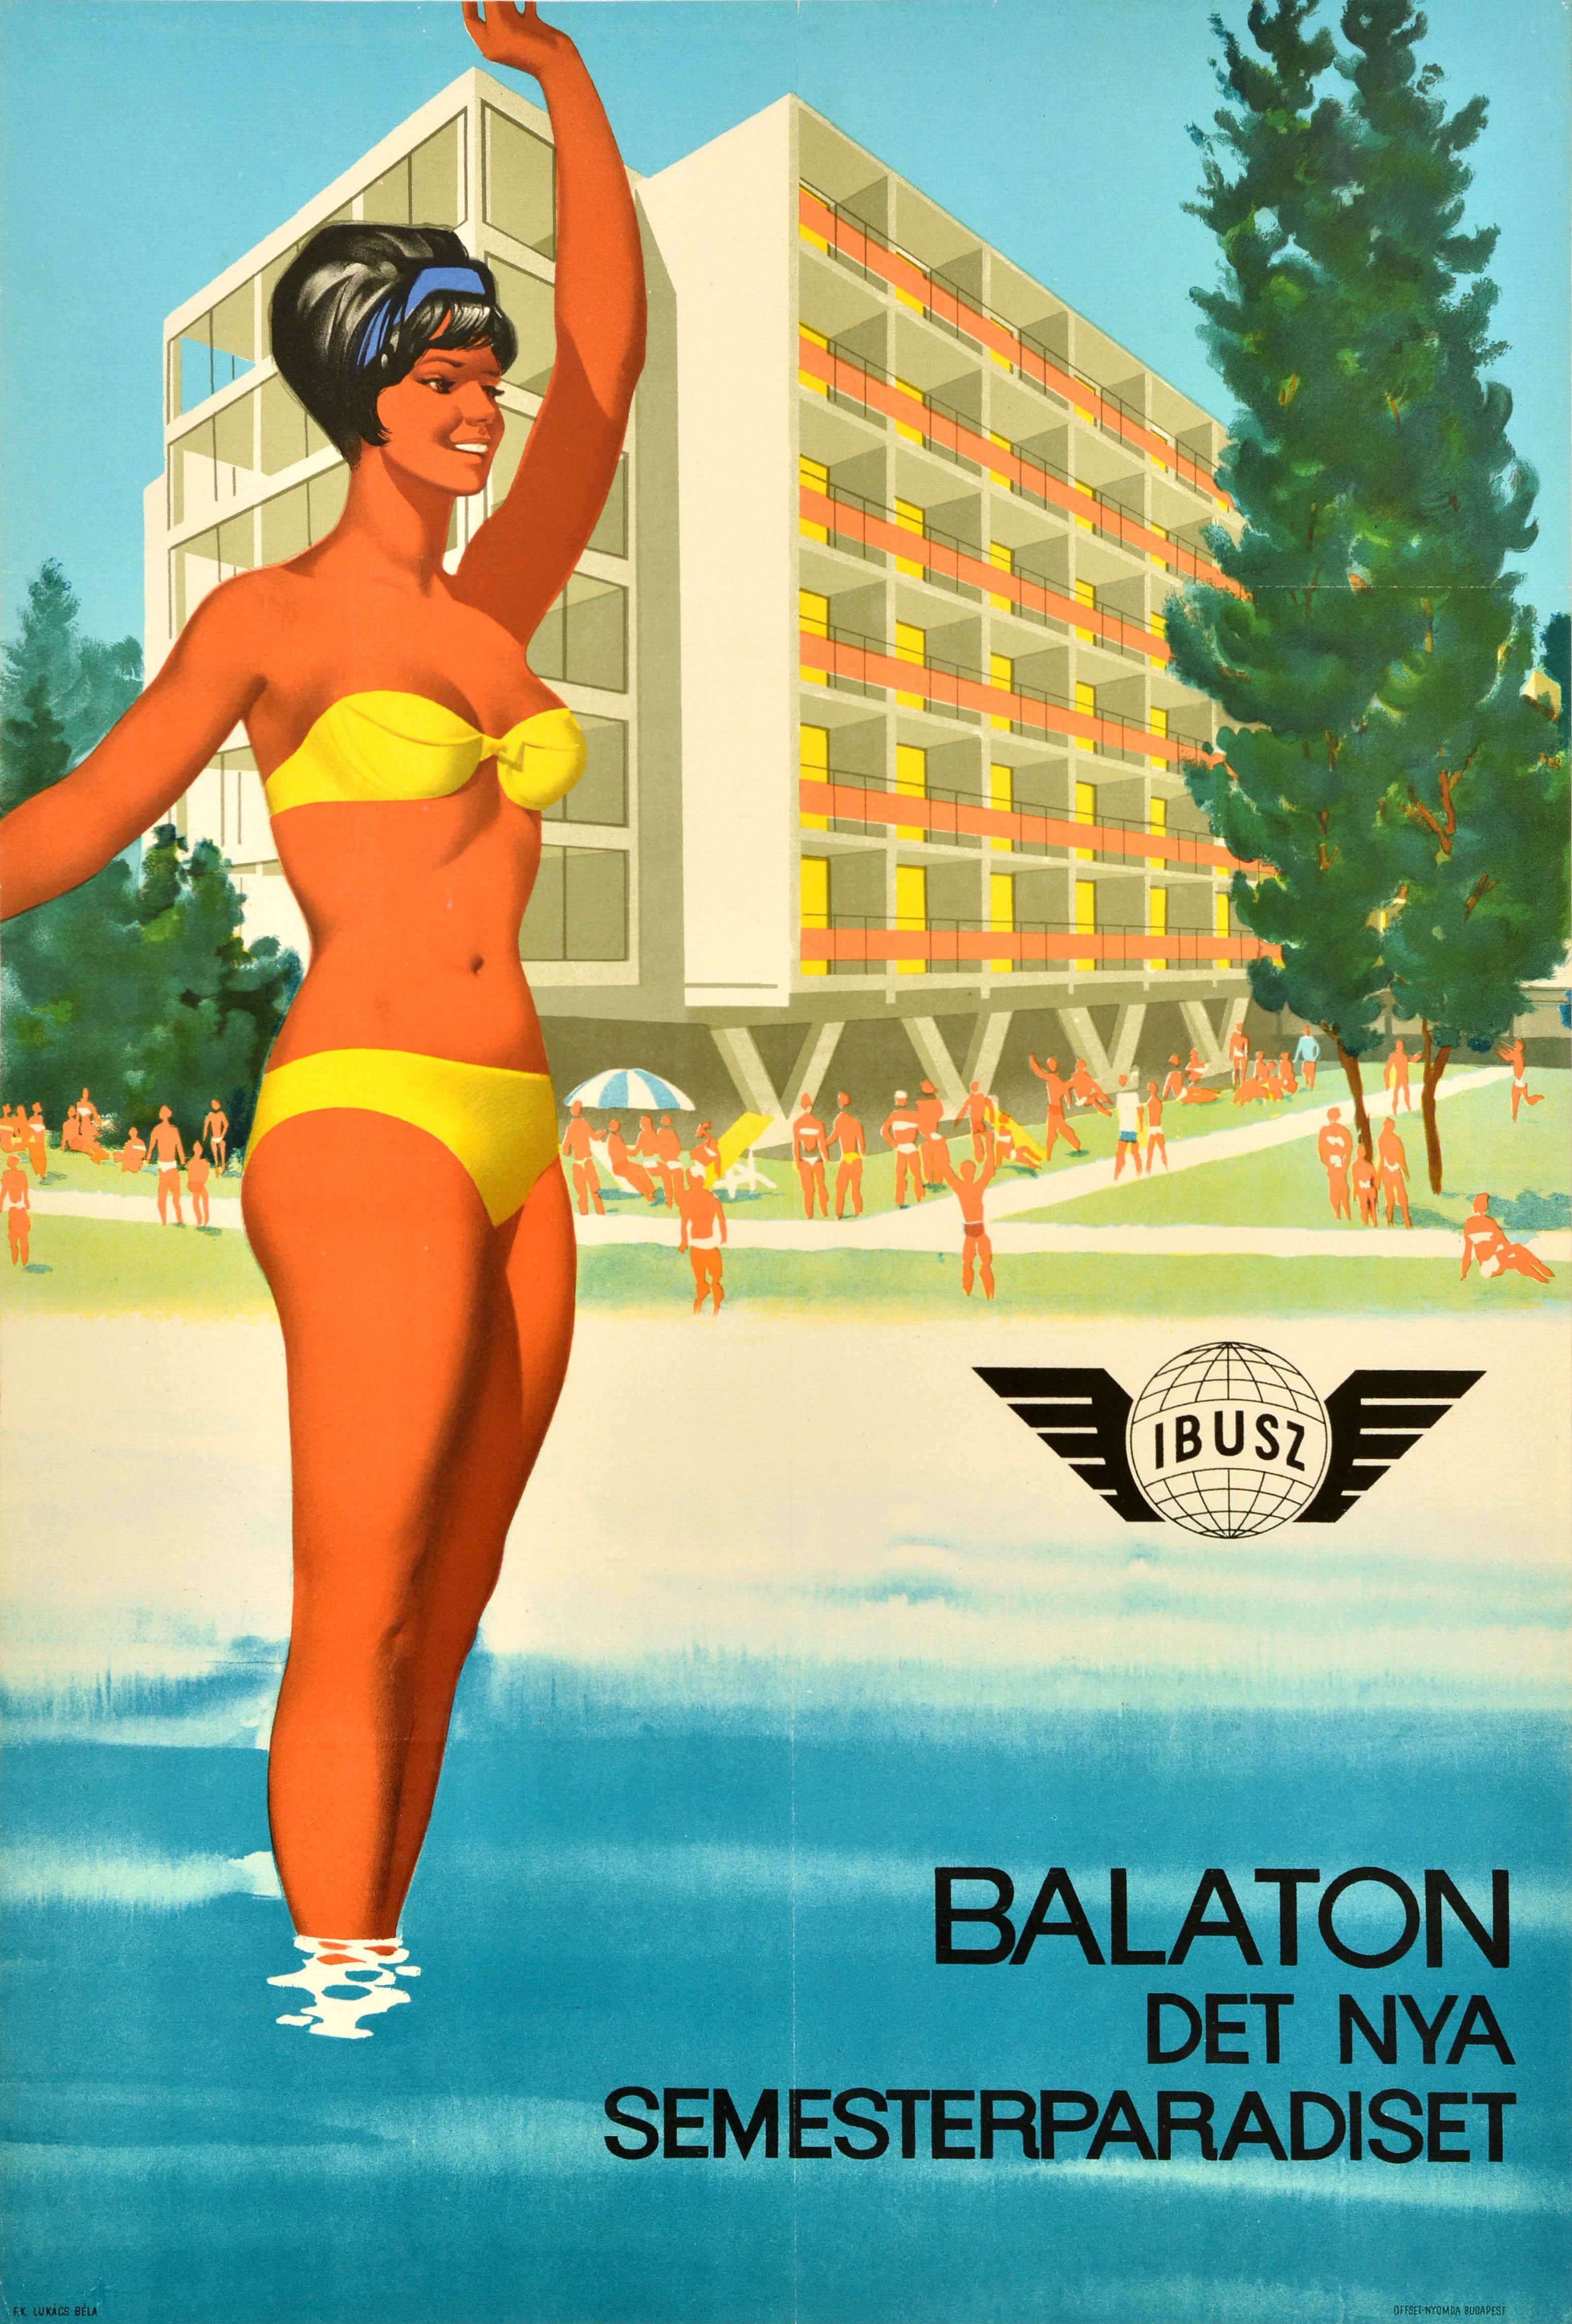 Lukacs Bela Print - Original Vintage Ibusz Travel Poster Balaton Hungary New Holiday Paradise Resort